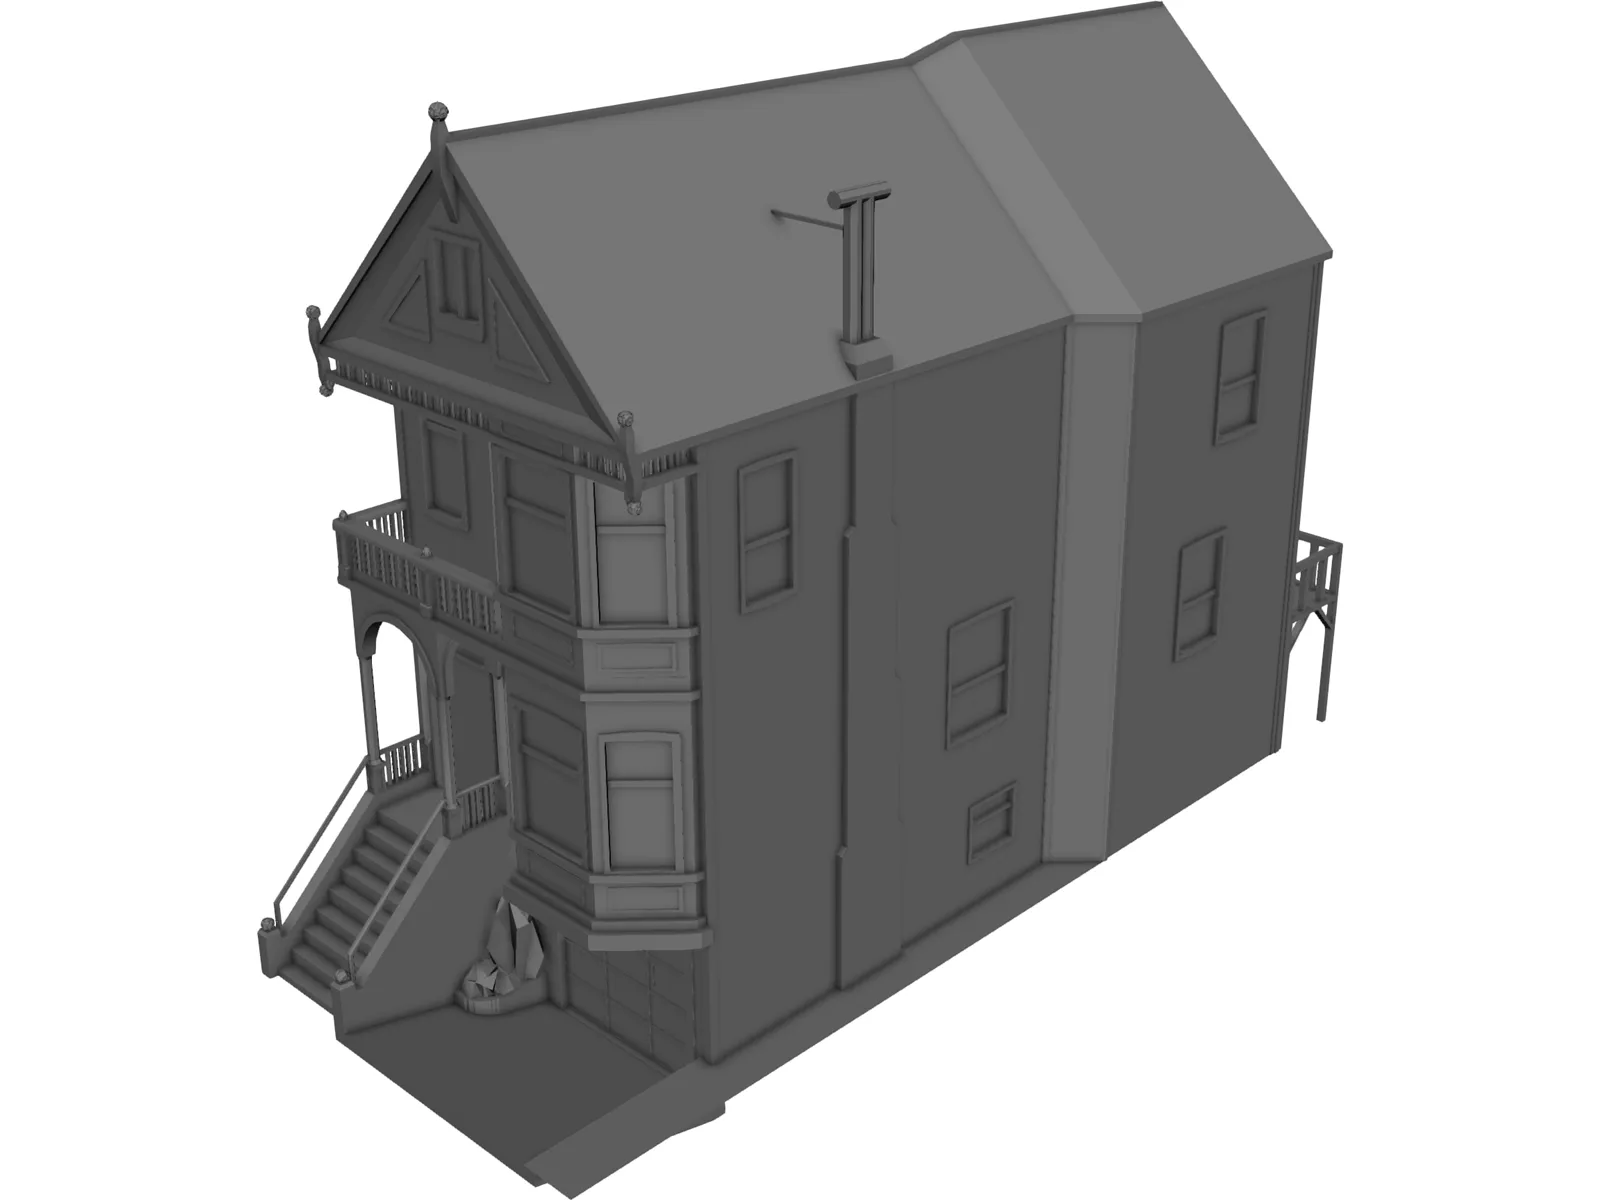 House Urban Victorian 3D Model